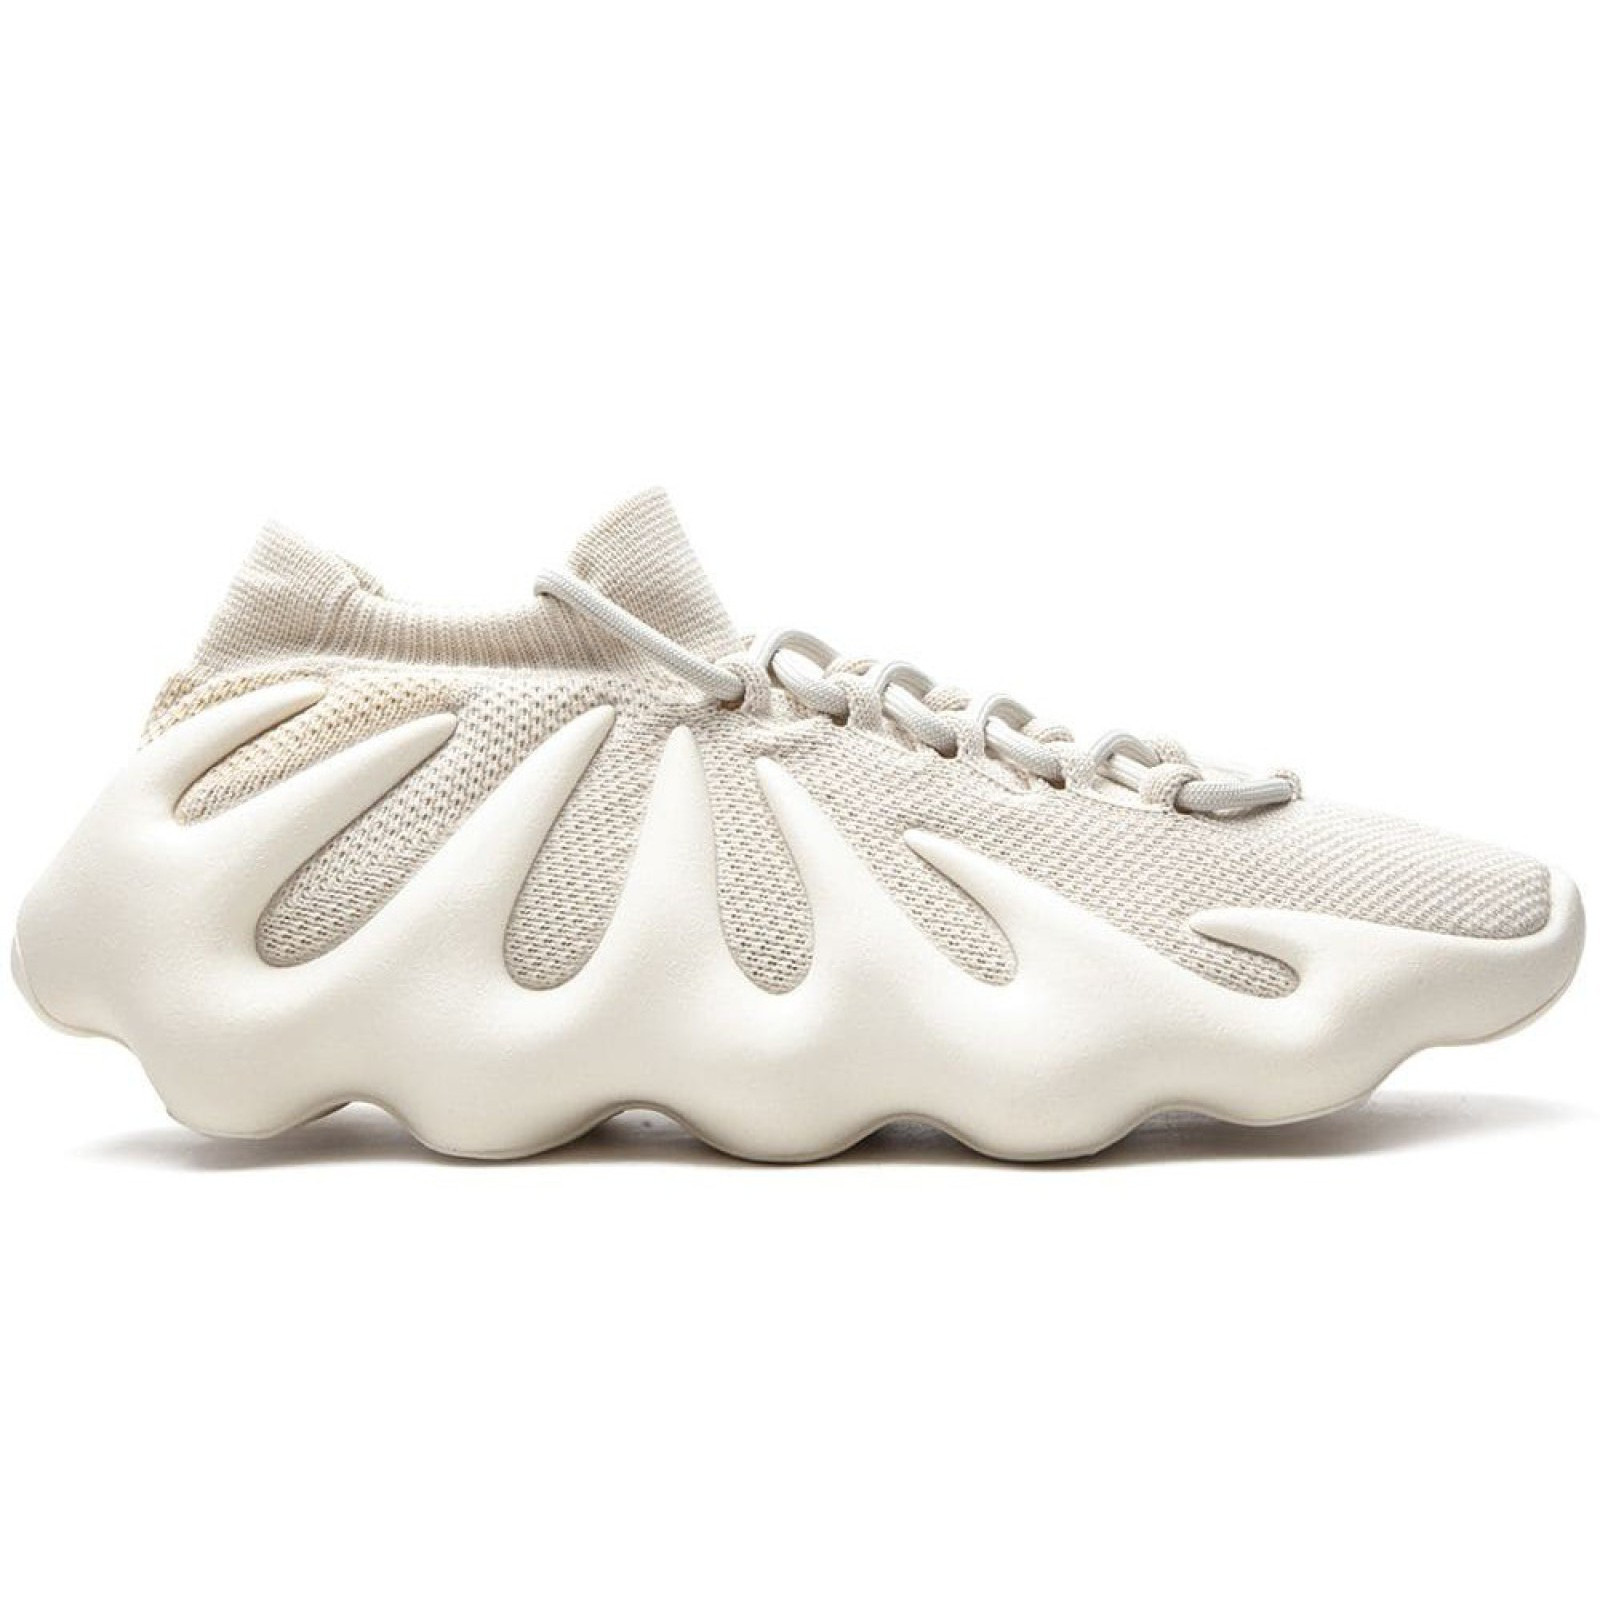 Adidas Yeezy 450
« Cloud White »